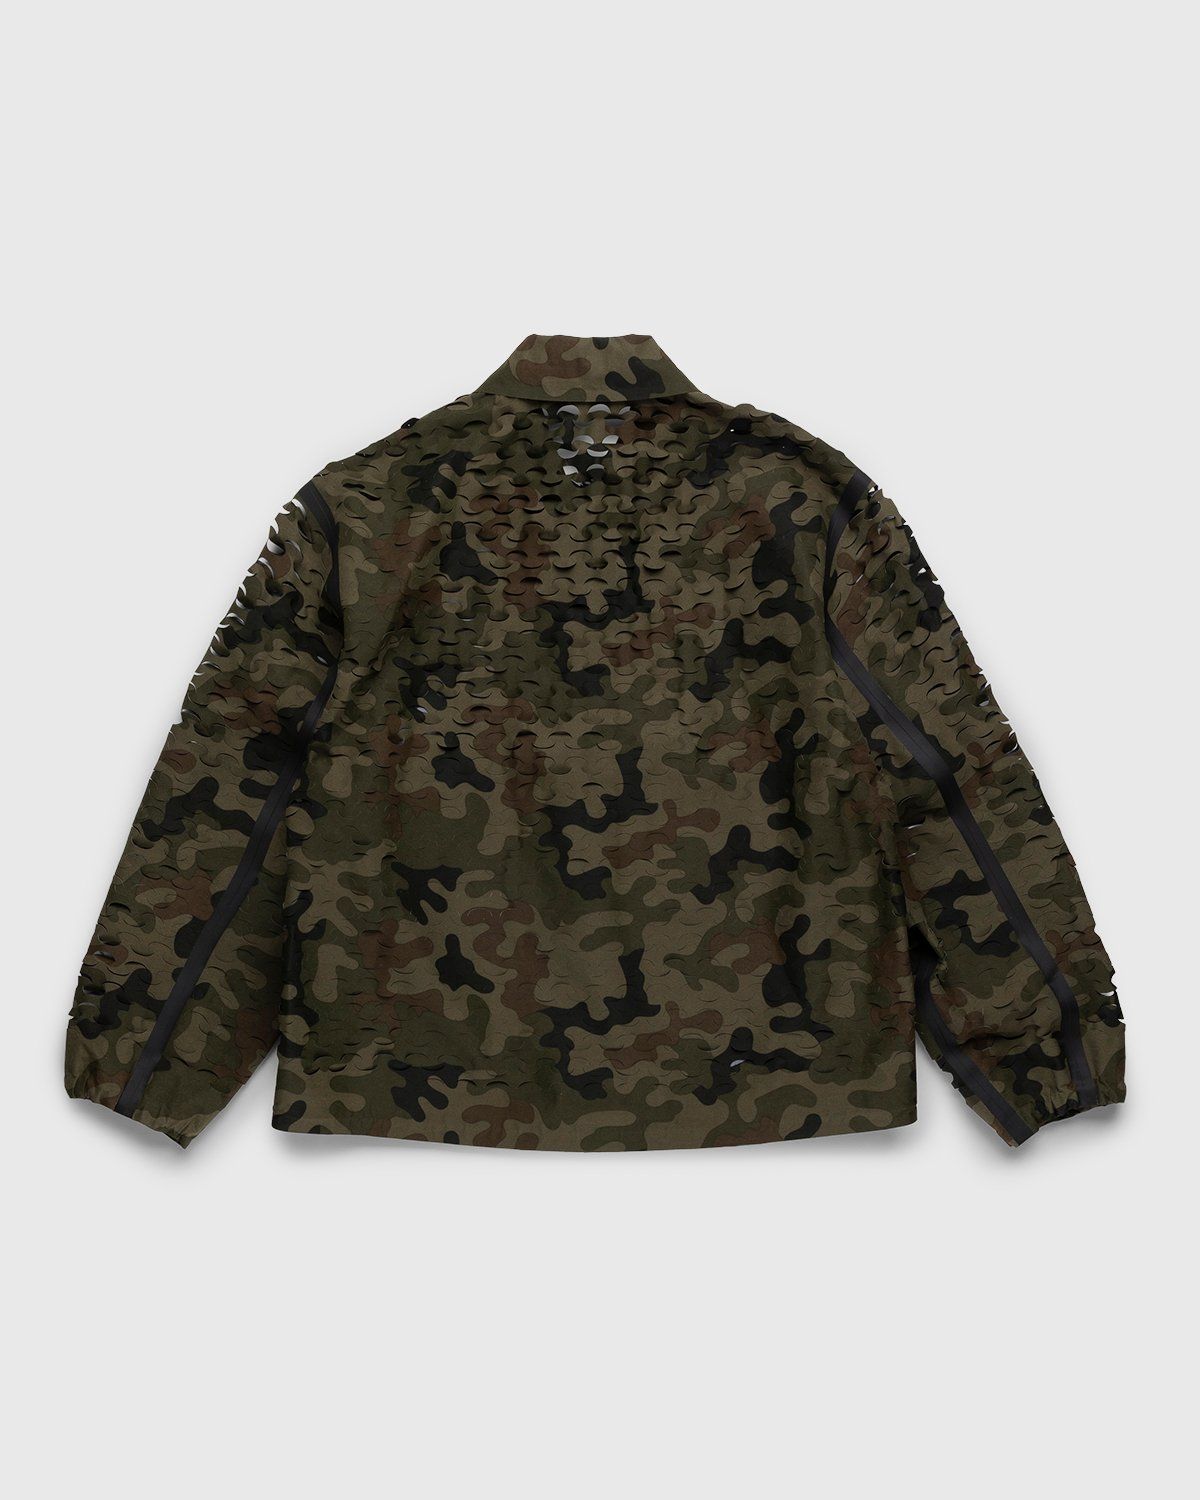 Dries van Noten – Voyde Laser Jacket Camouflage - Jackets - Brown - Image 2